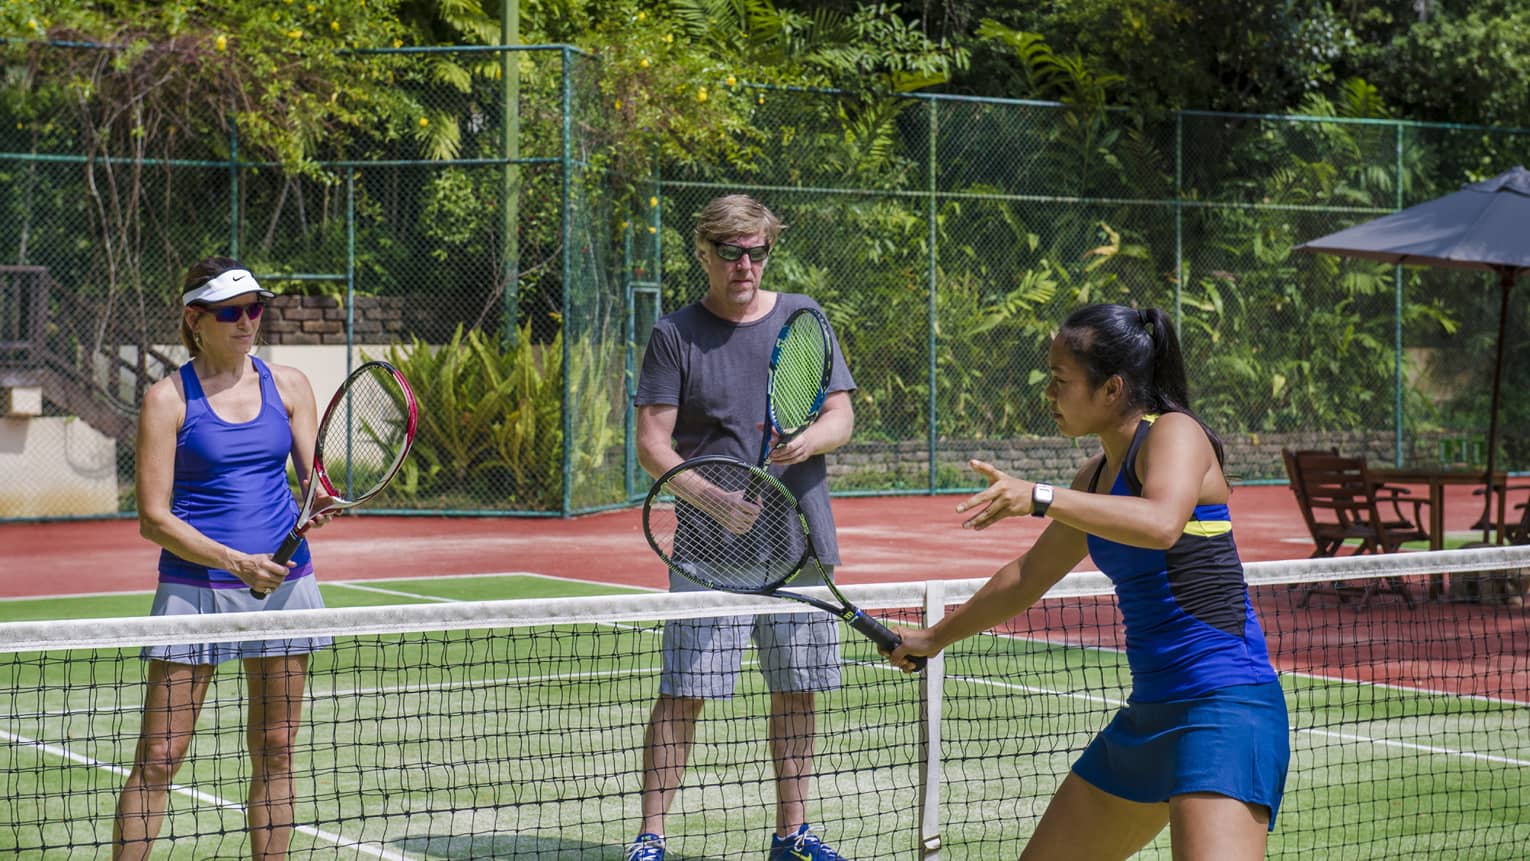 Woman demonstrates tennis serve at net while tennis pro Nichapa Rungtein, woman watch